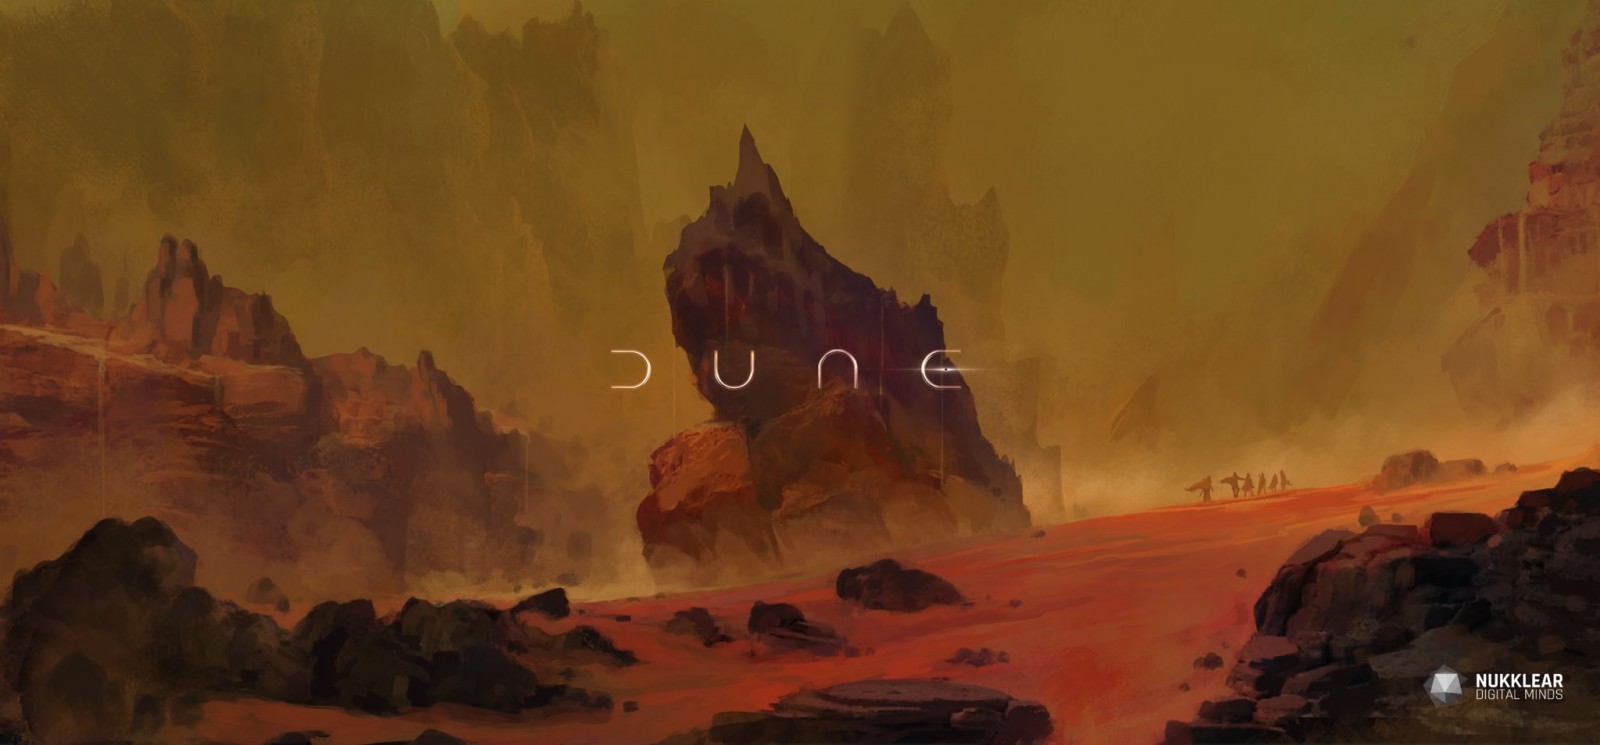 Oficial: Dune tendrá videojuego 2